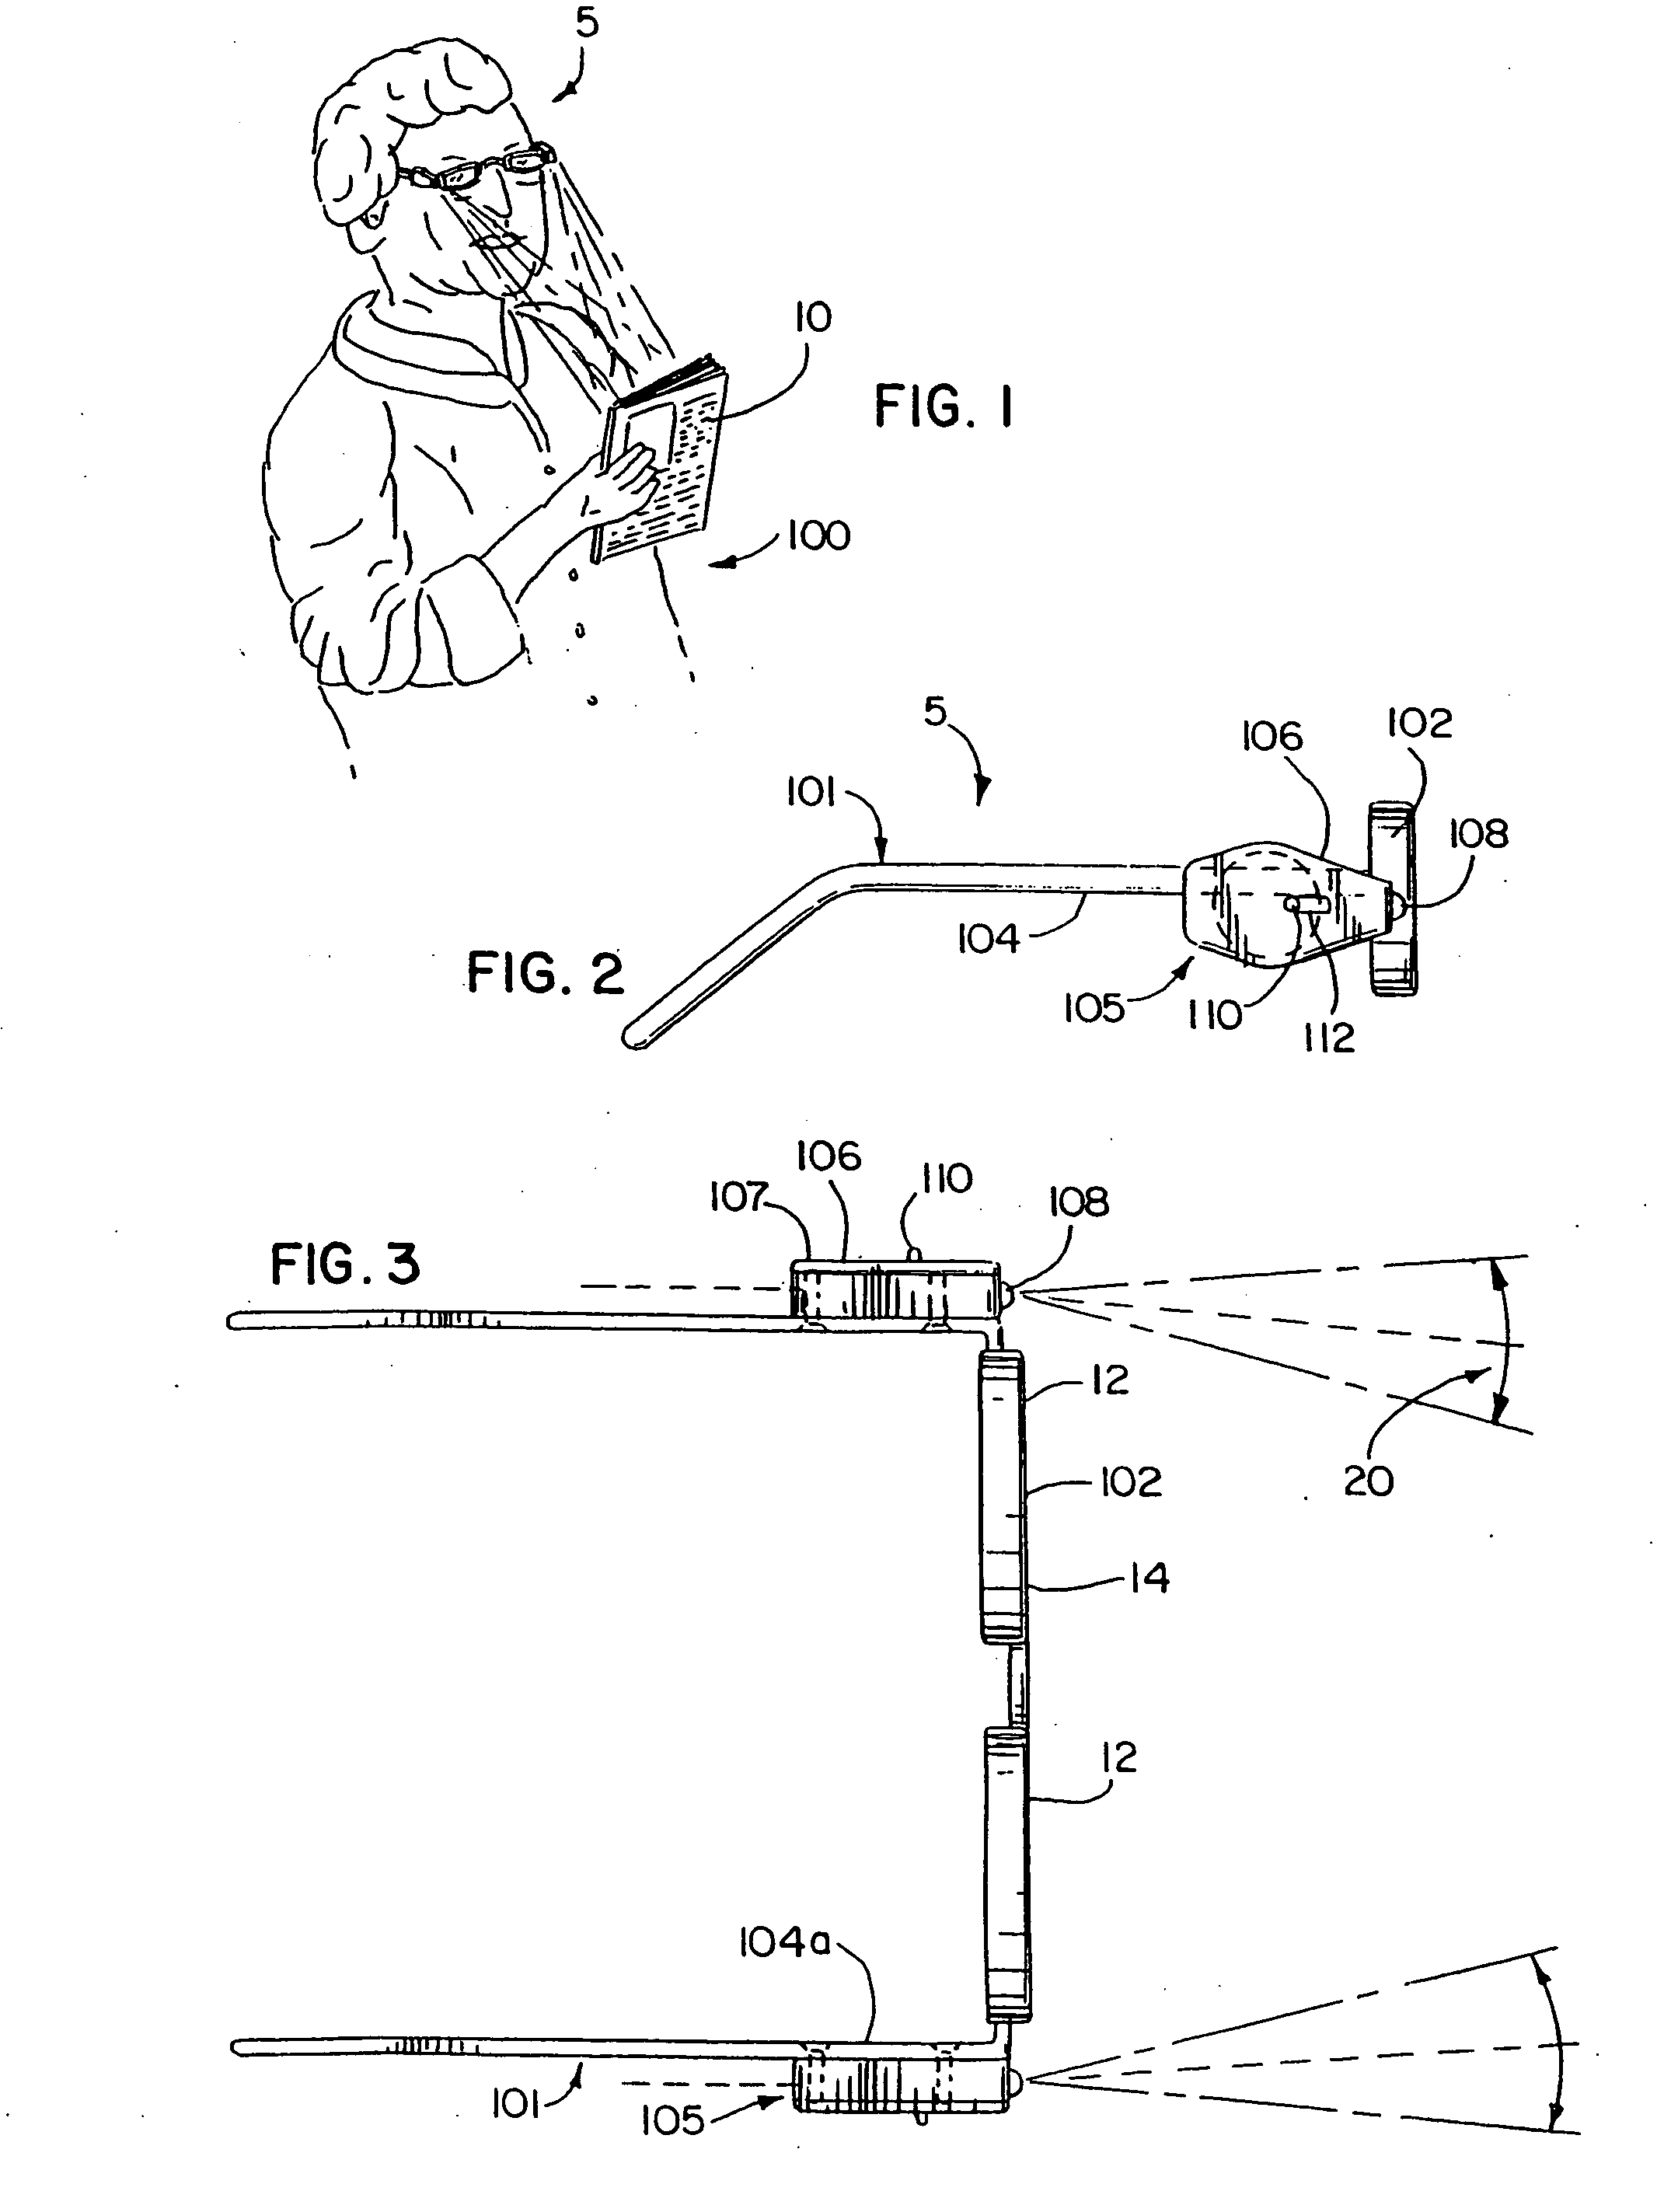 Clip-on light apparatus